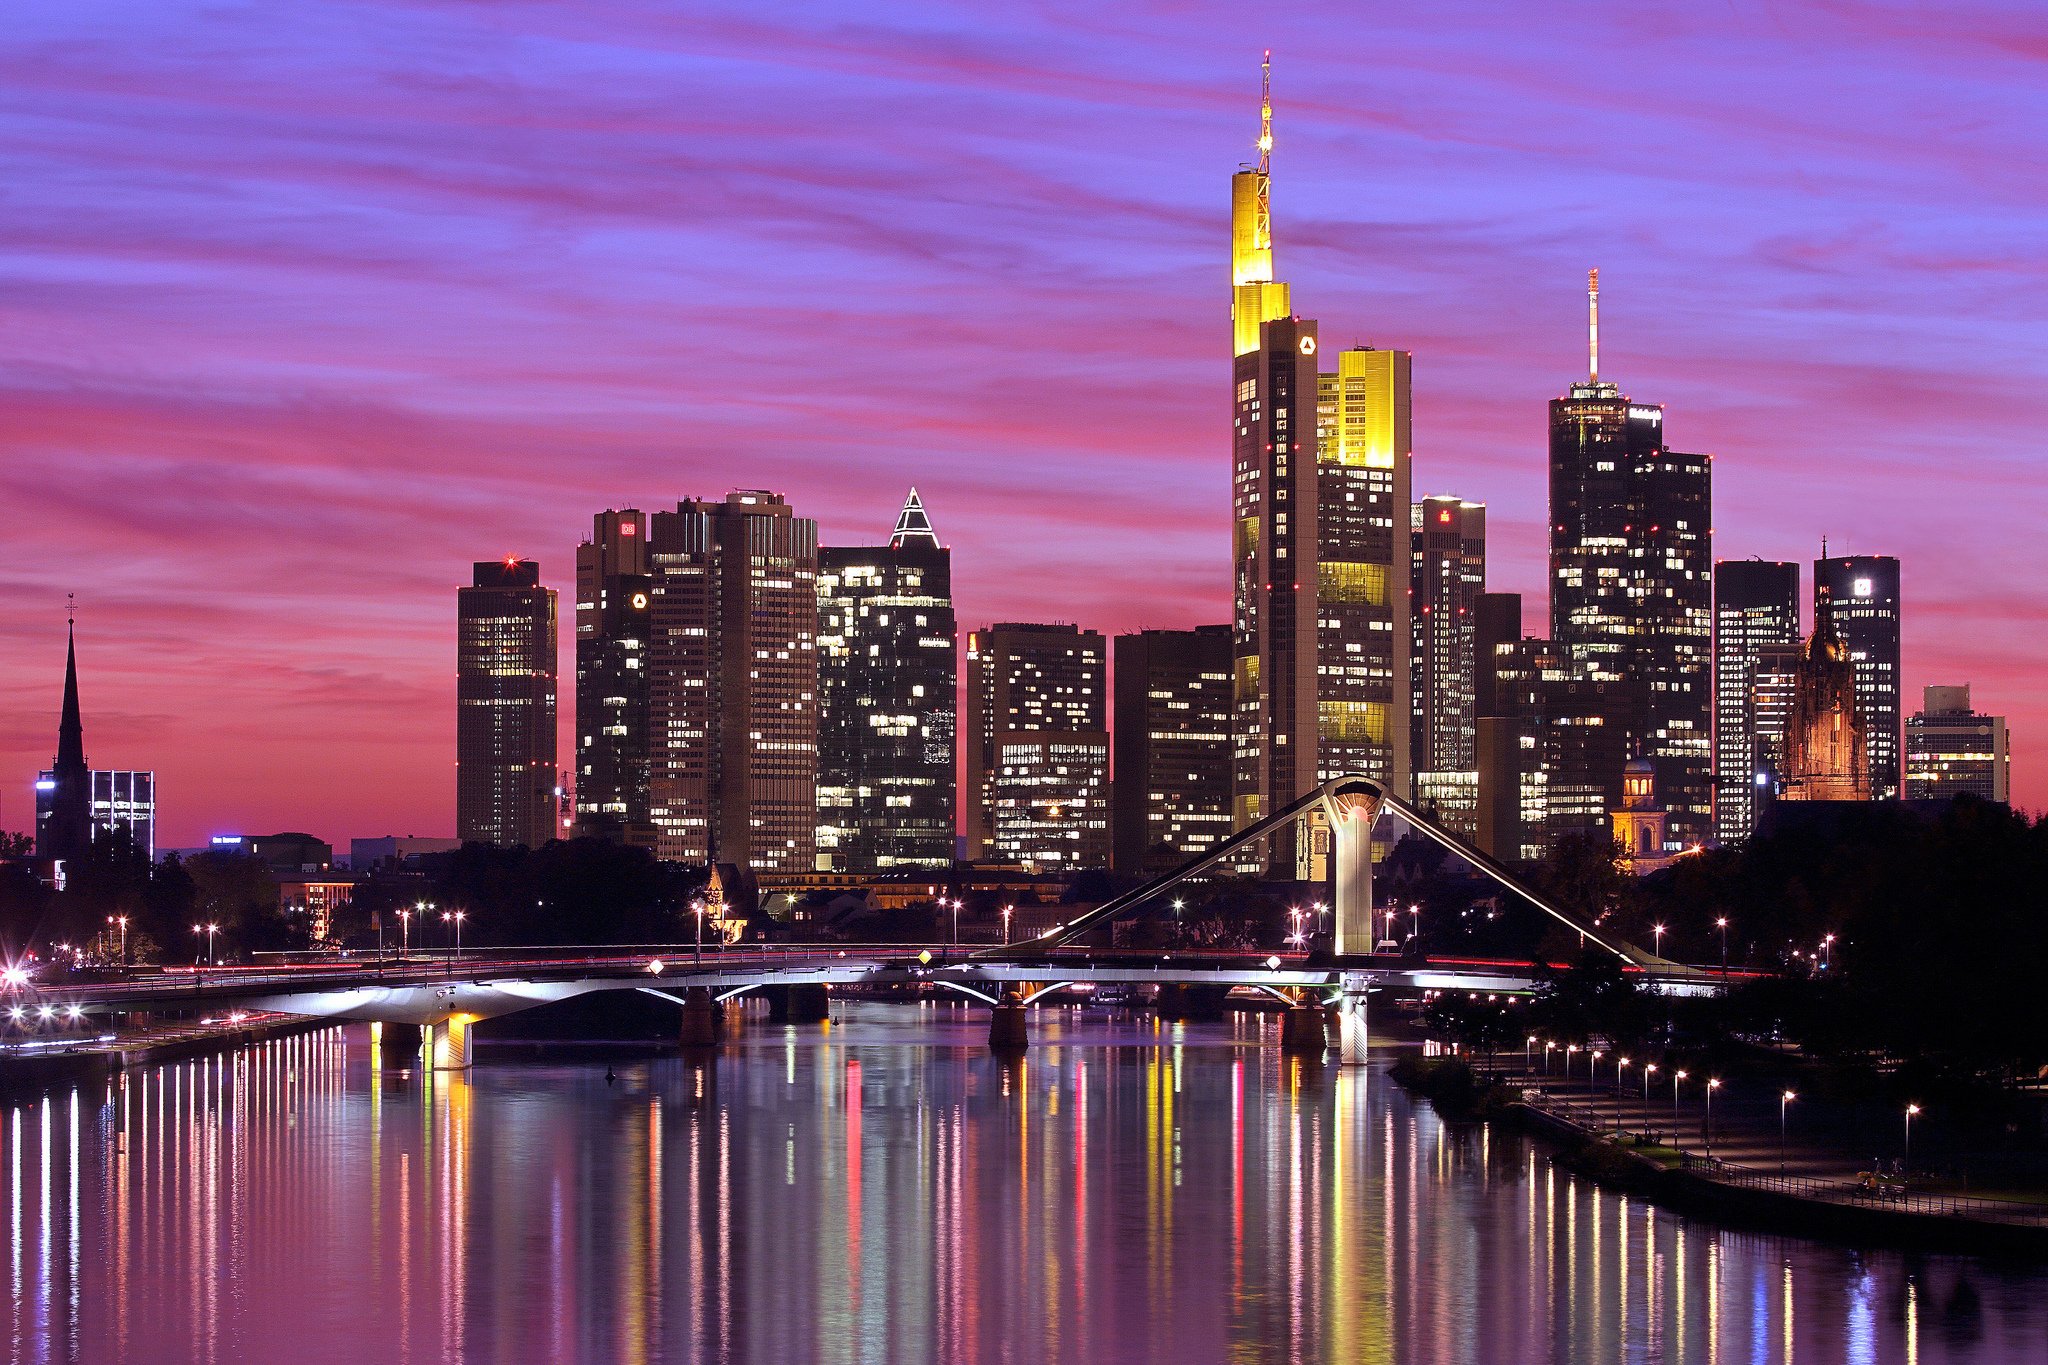 deutschland, Germany, Frankfurt, Am, Main, City, River, Bridge, Lights, Lighting, Reflection, Evening, Sky, Sunset, Buildings, Houses, Skyscrapers Wallpaper